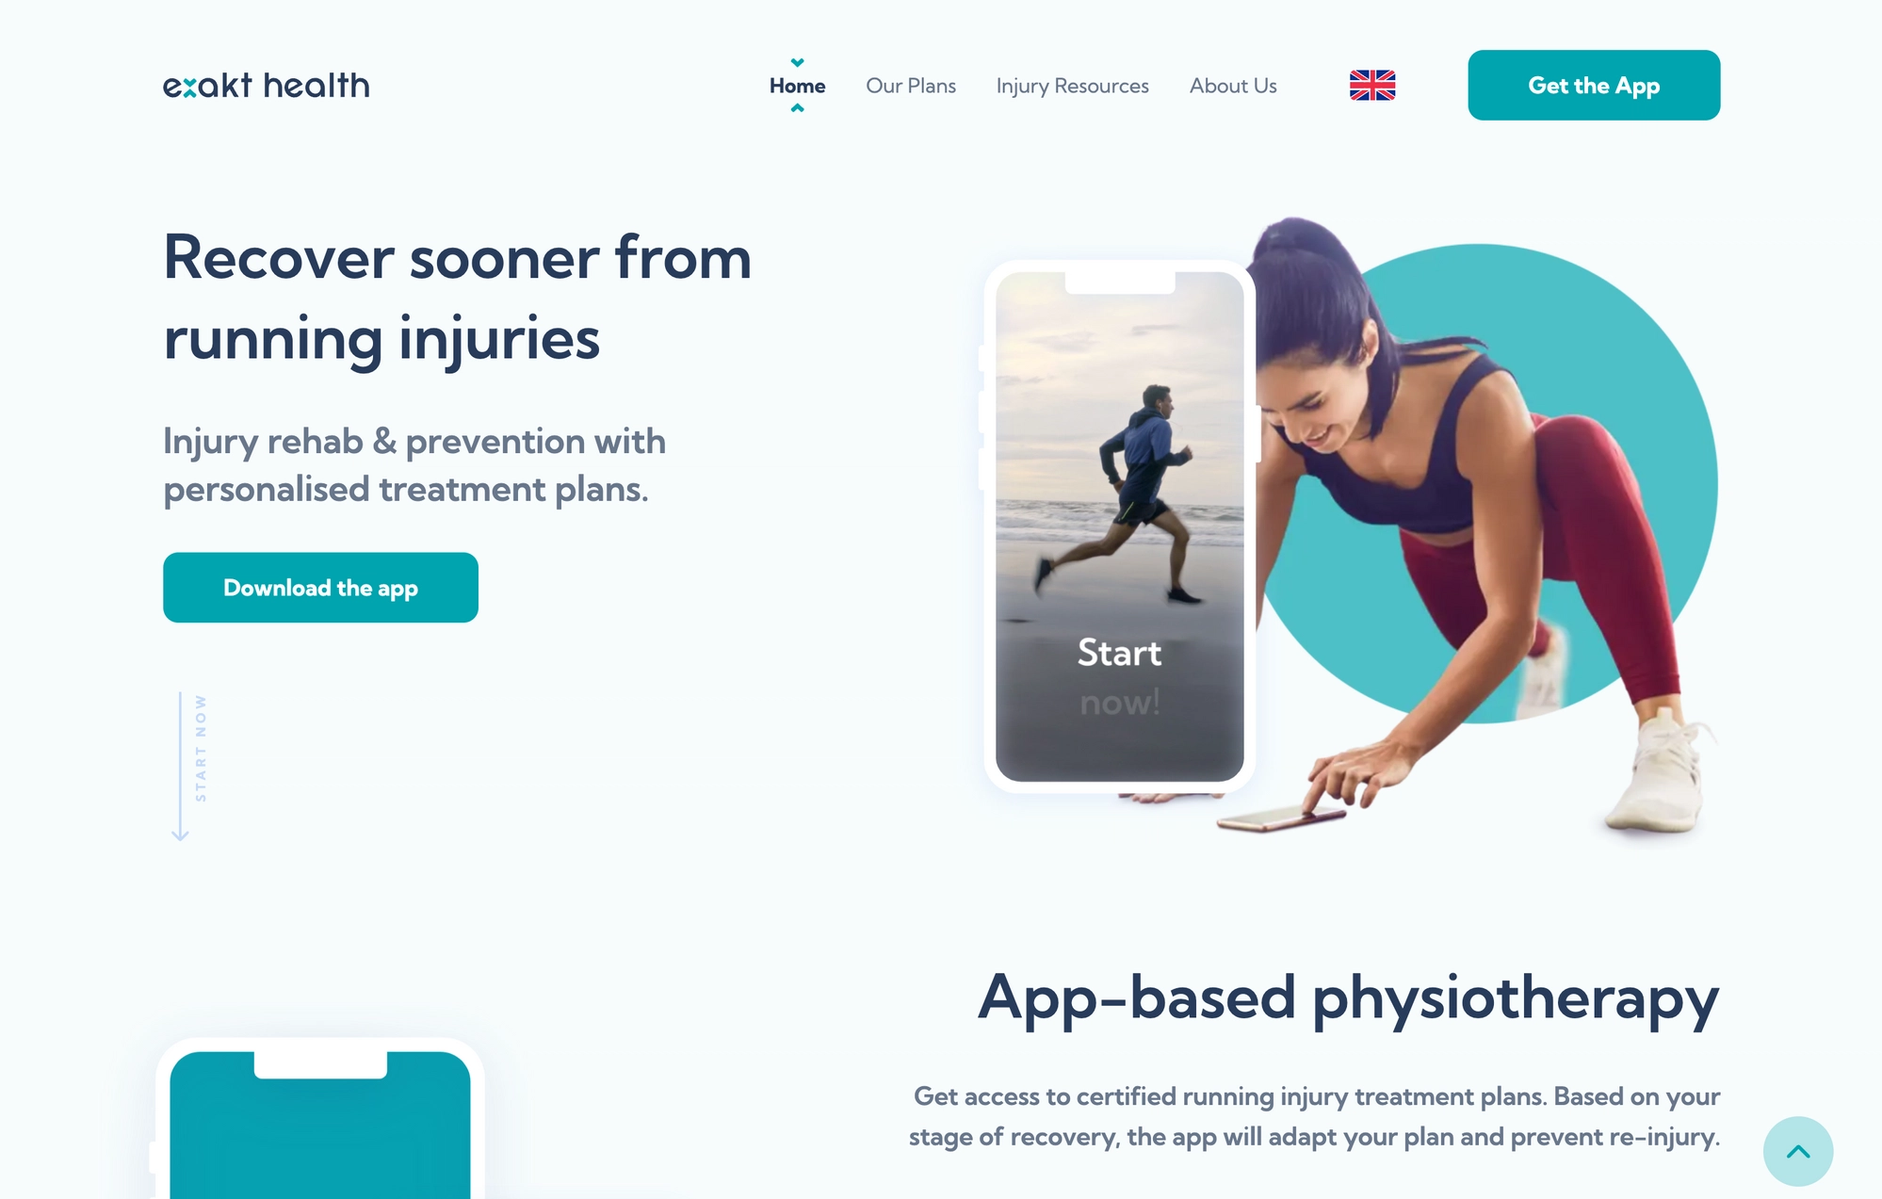 exakt health homepage